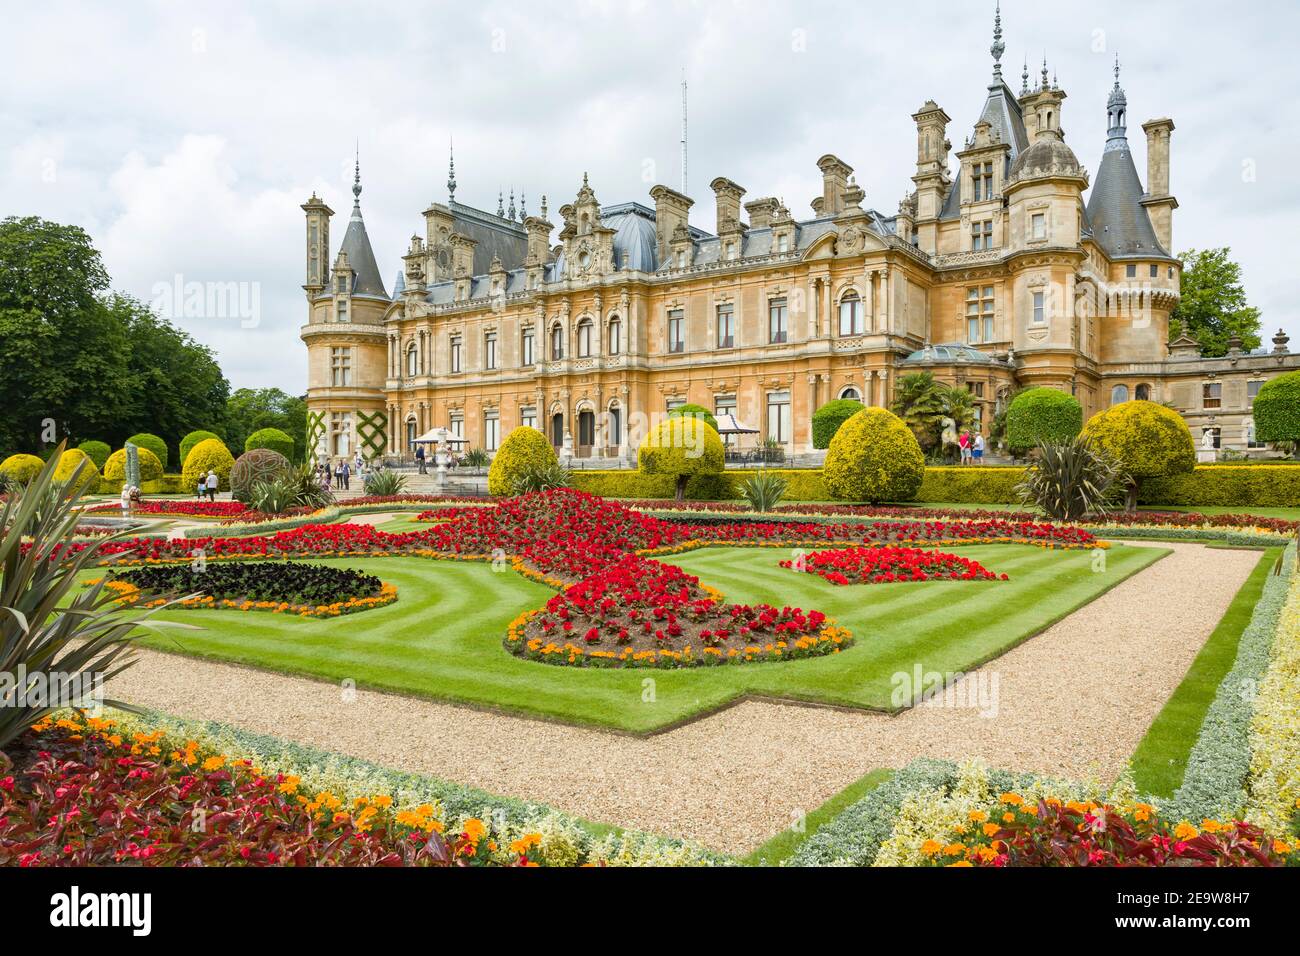 BUCKINGHAMSHIRE, UK - June 25, 2015. Waddesdon Manor house and gardens, an English country house in Buckinghamshire, UK Stock Photo